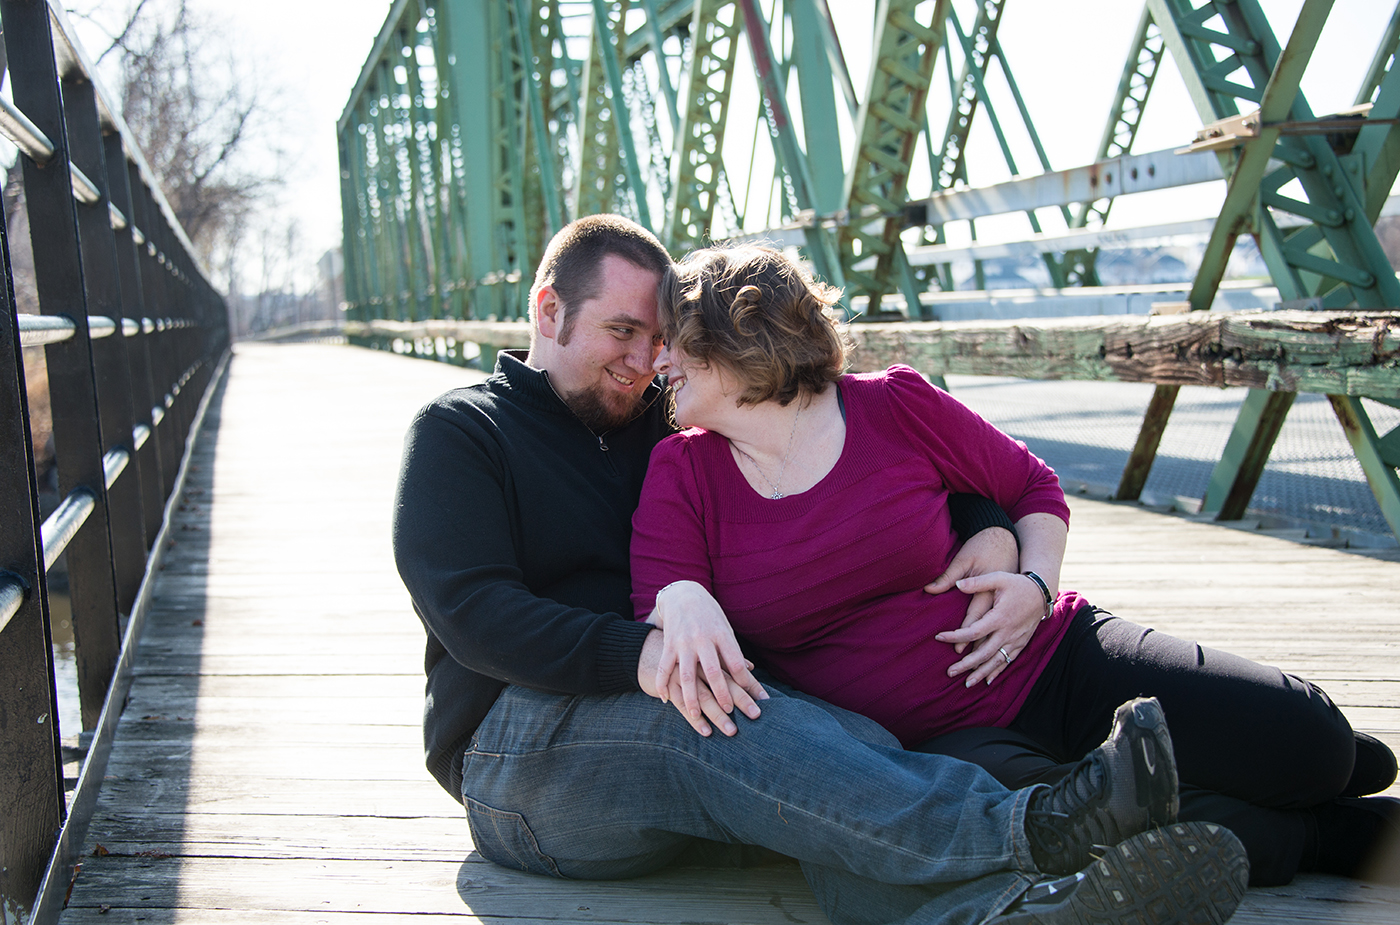 All Occasions Photography Albany NY - Maternity Photography on Walking Bridge